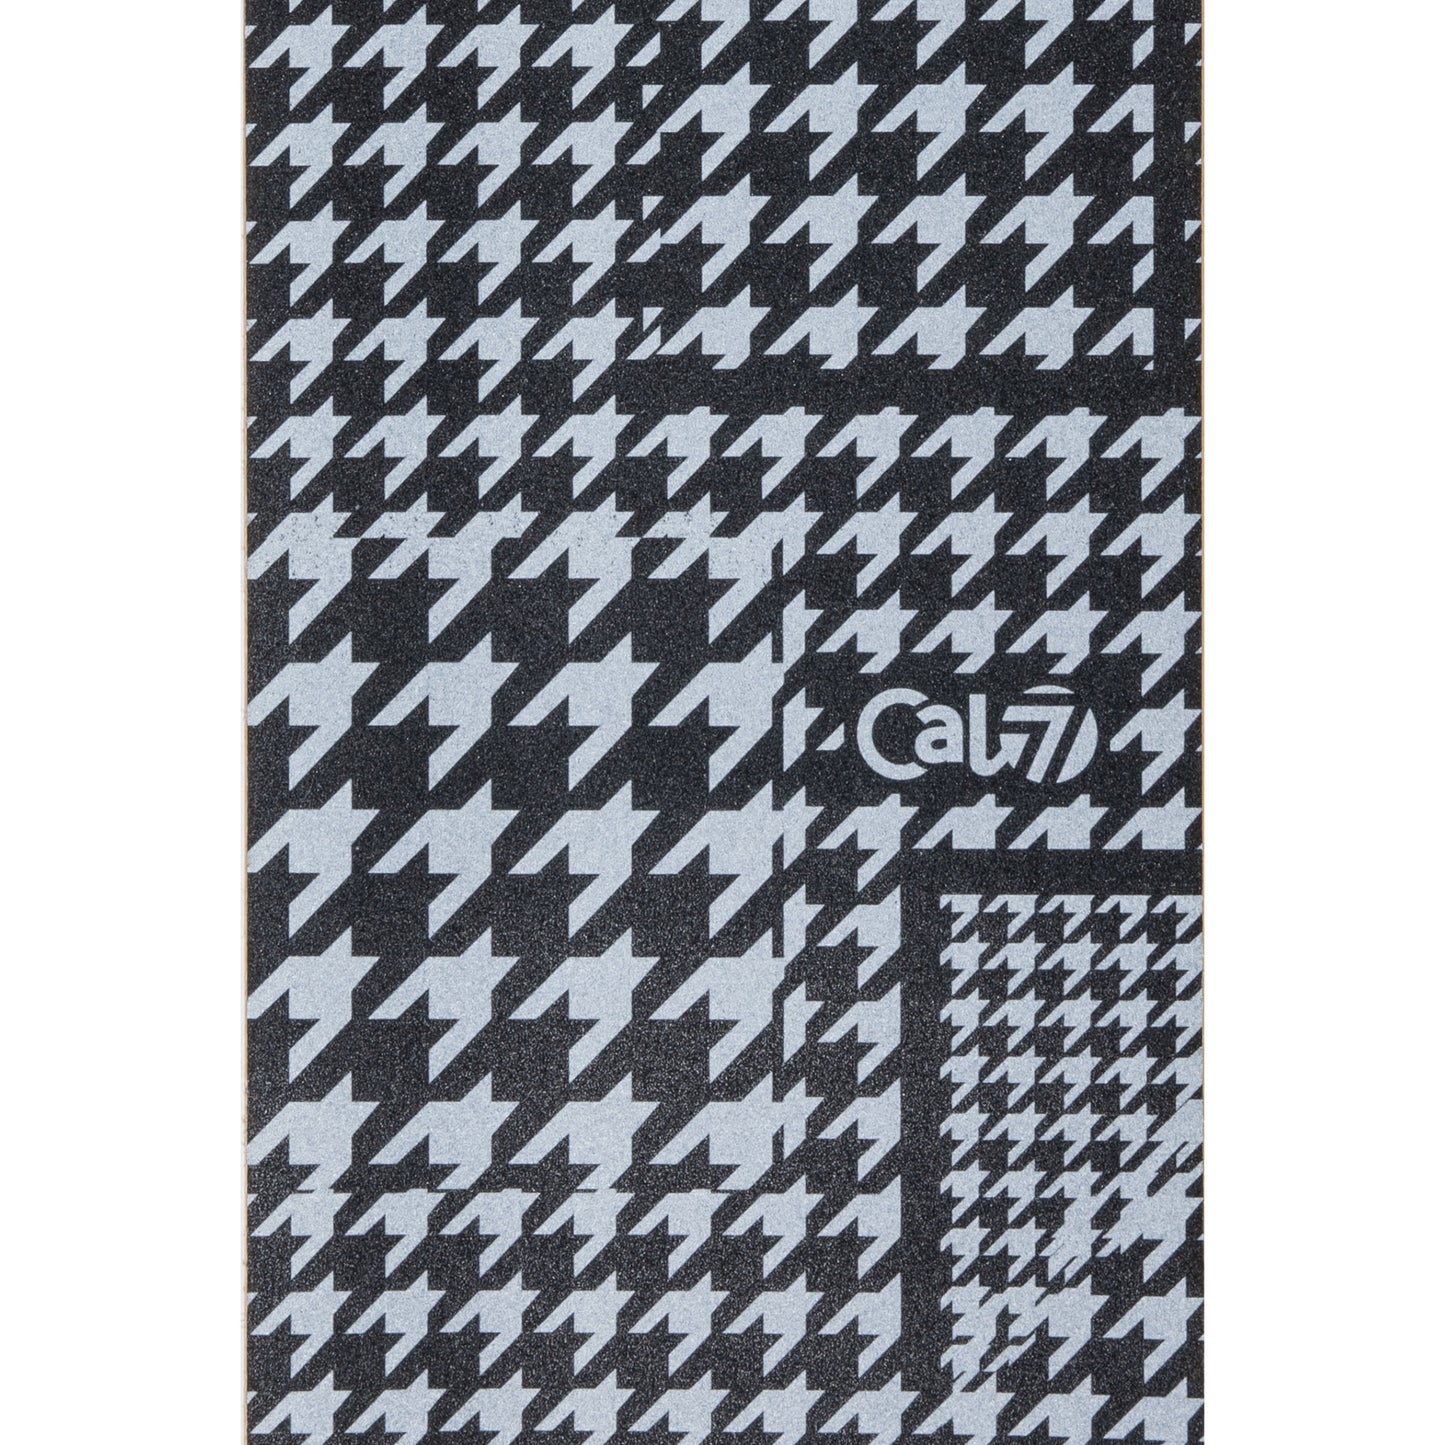 Cal 7 black skateboard griptape with tweed design